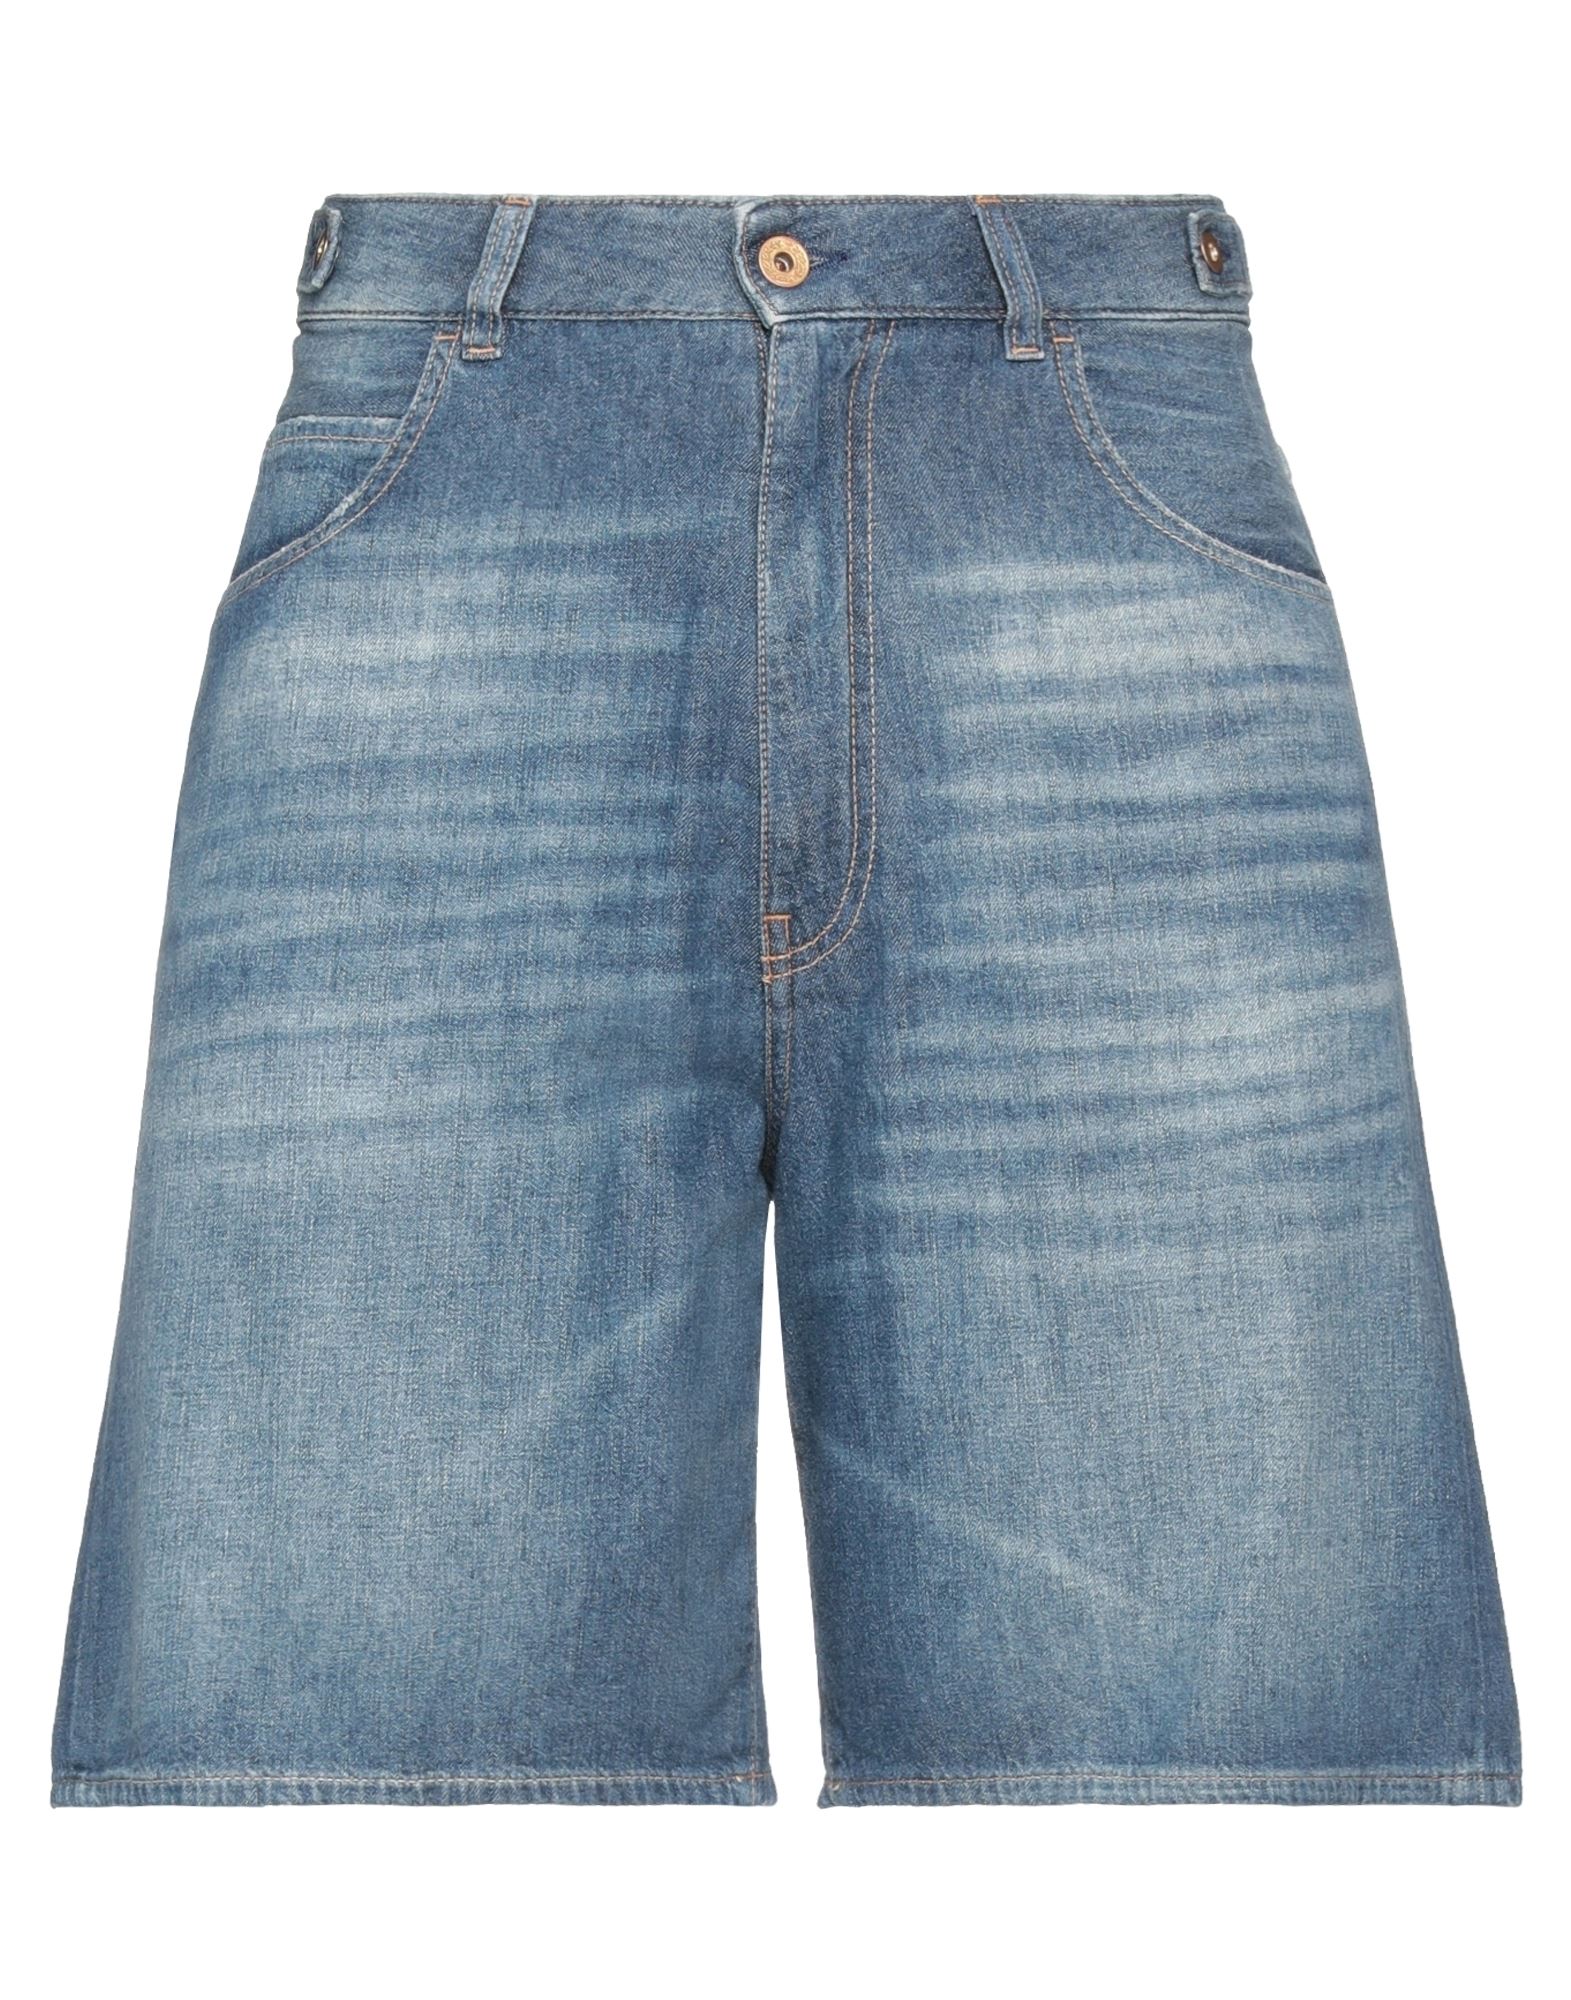 Pence Denim Shorts In Blue